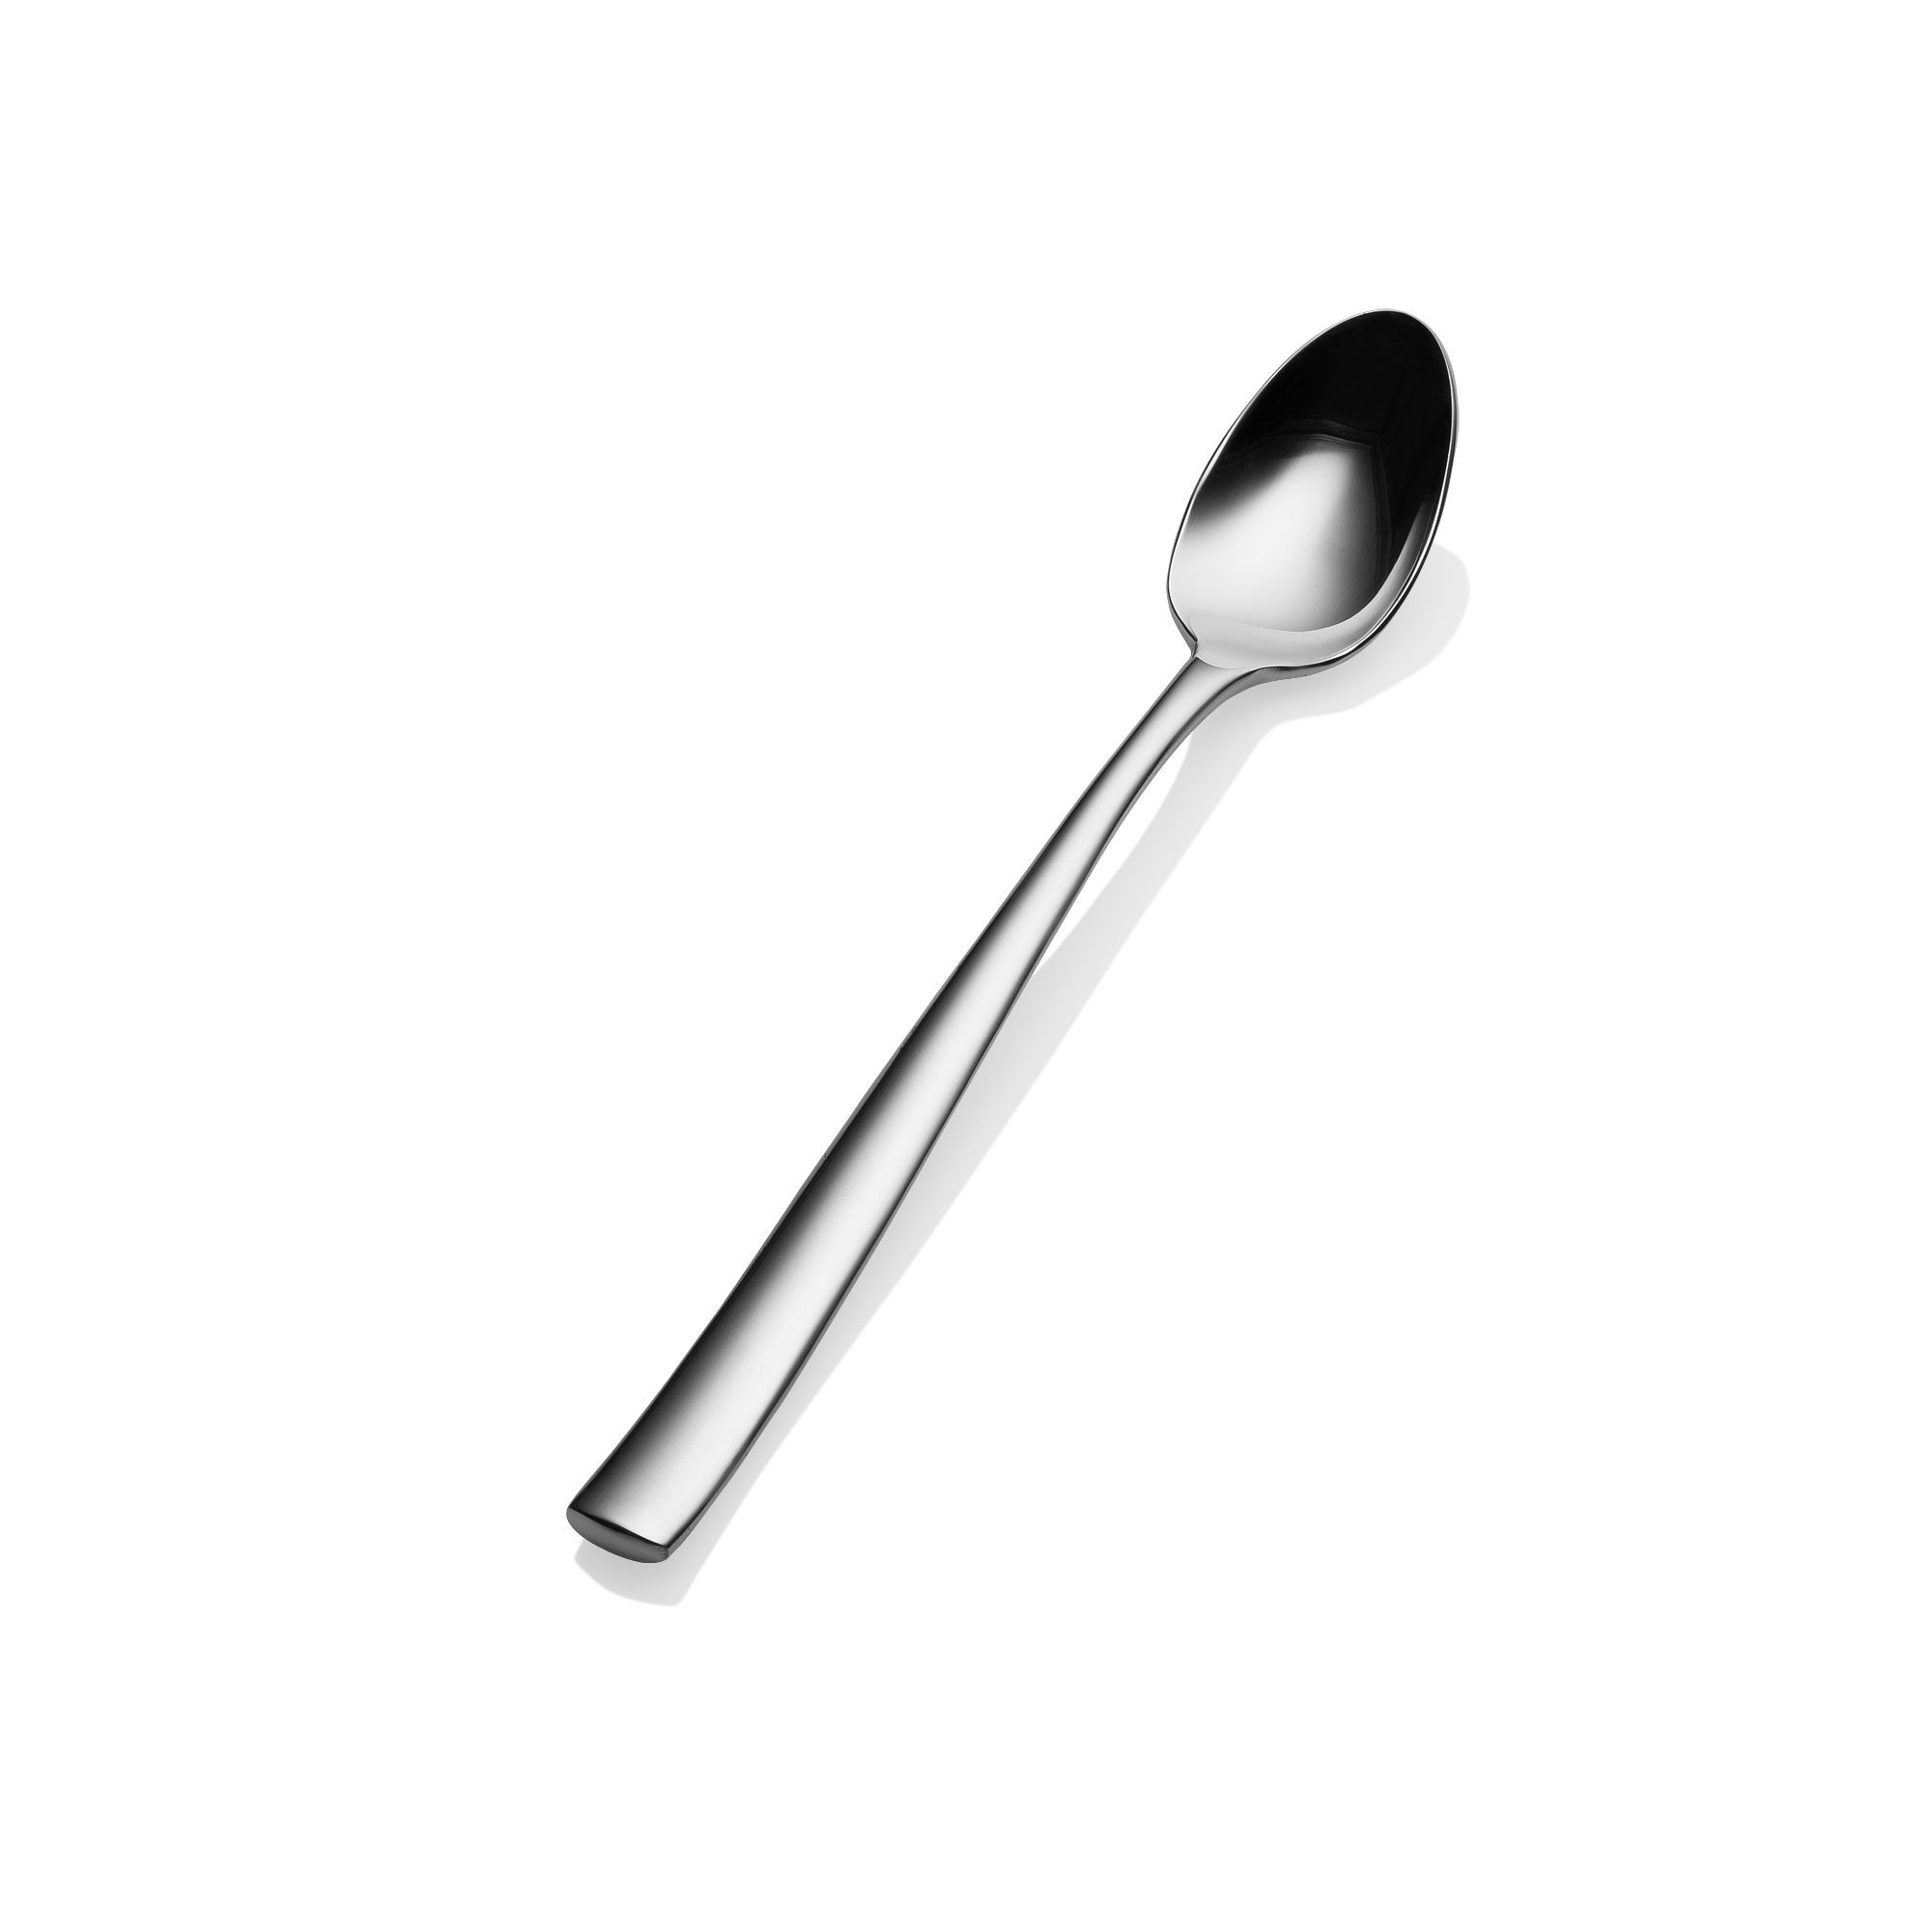 Bon Chef S3002 Manhattan 18/8 Stainless Steel Iced Tea Spoon